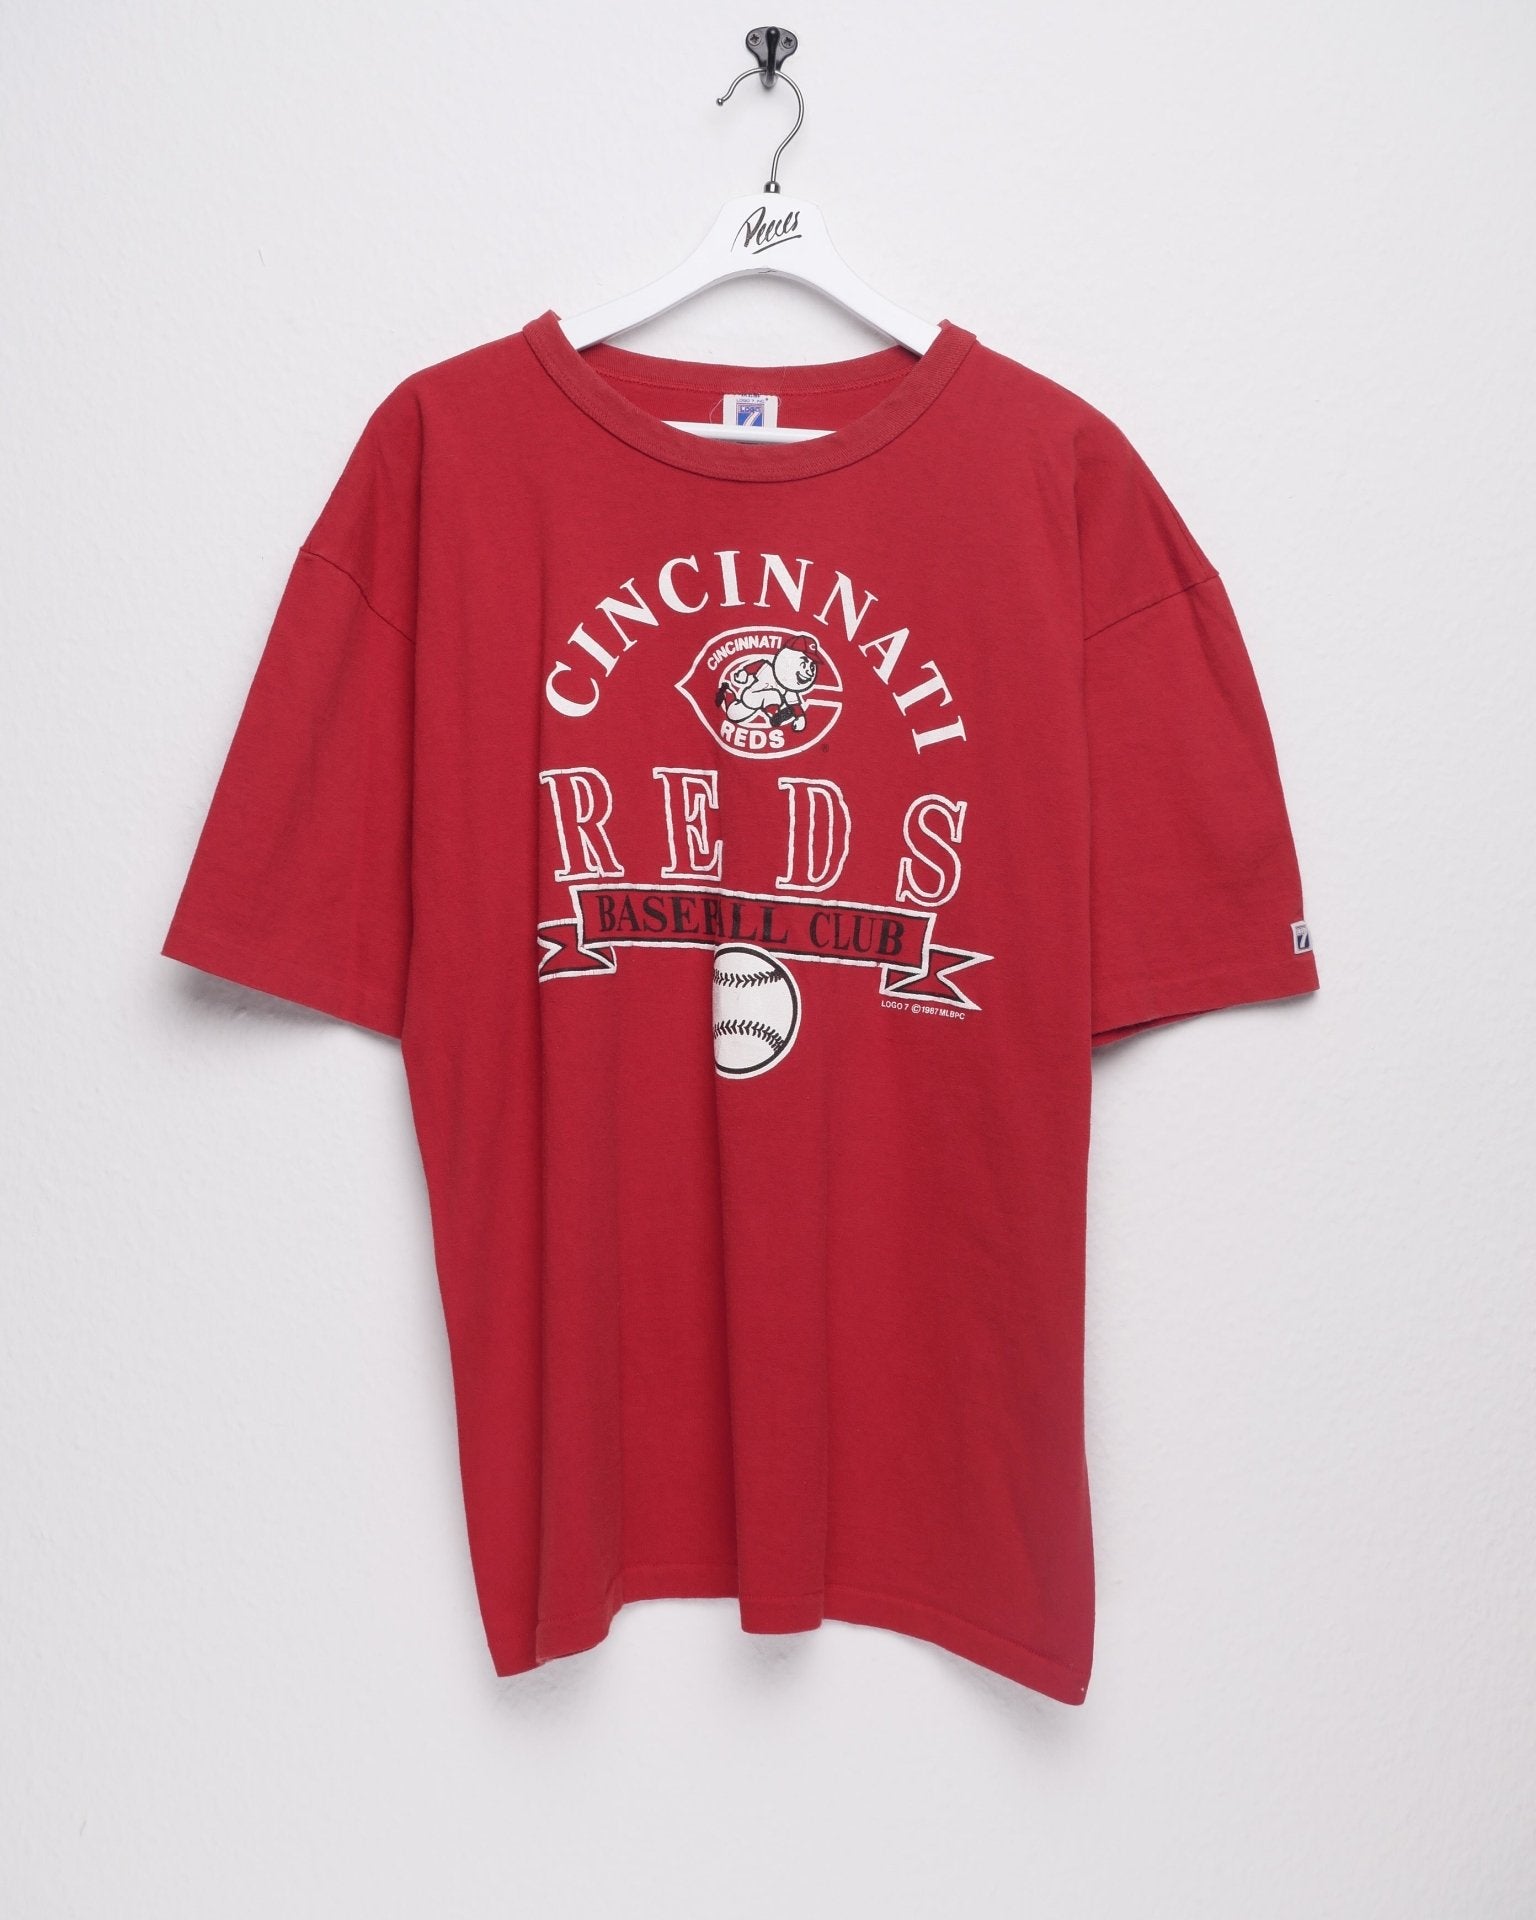 MLB Cincinnati Reds 1987 printed Logo Vintage Shirt - Peeces